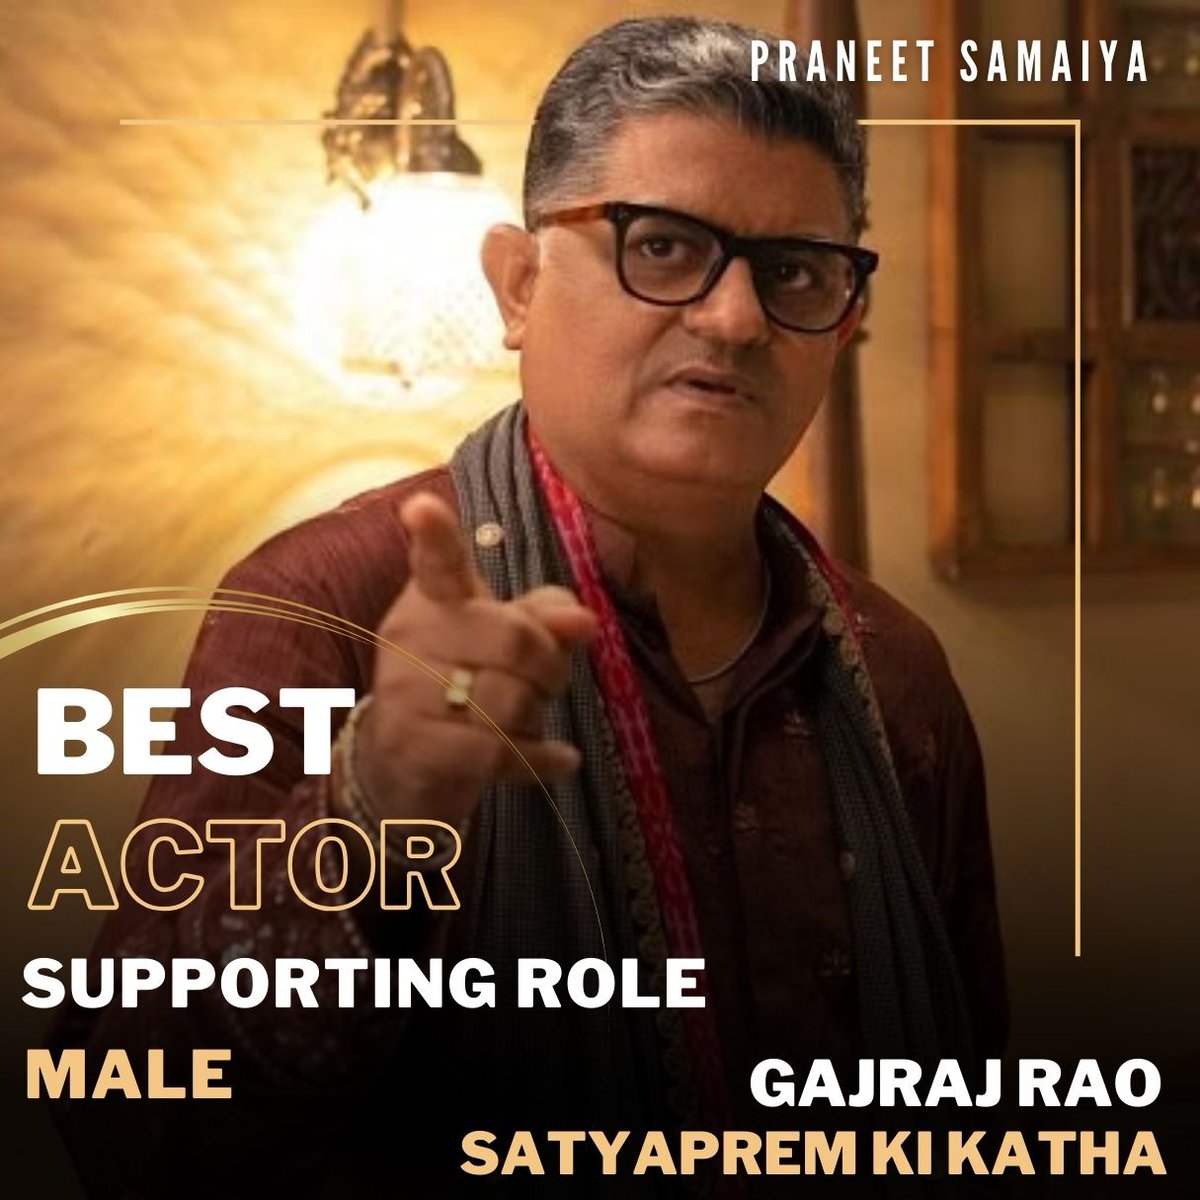 Best Actor Supporting Role 2023 (Male)💥   
Gajraj Rao from Satyaprem Ki Katha

@raogajraj #GajrajRao #BestActor #KartikAaryan #SatyapremKiKatha #BestActor2023